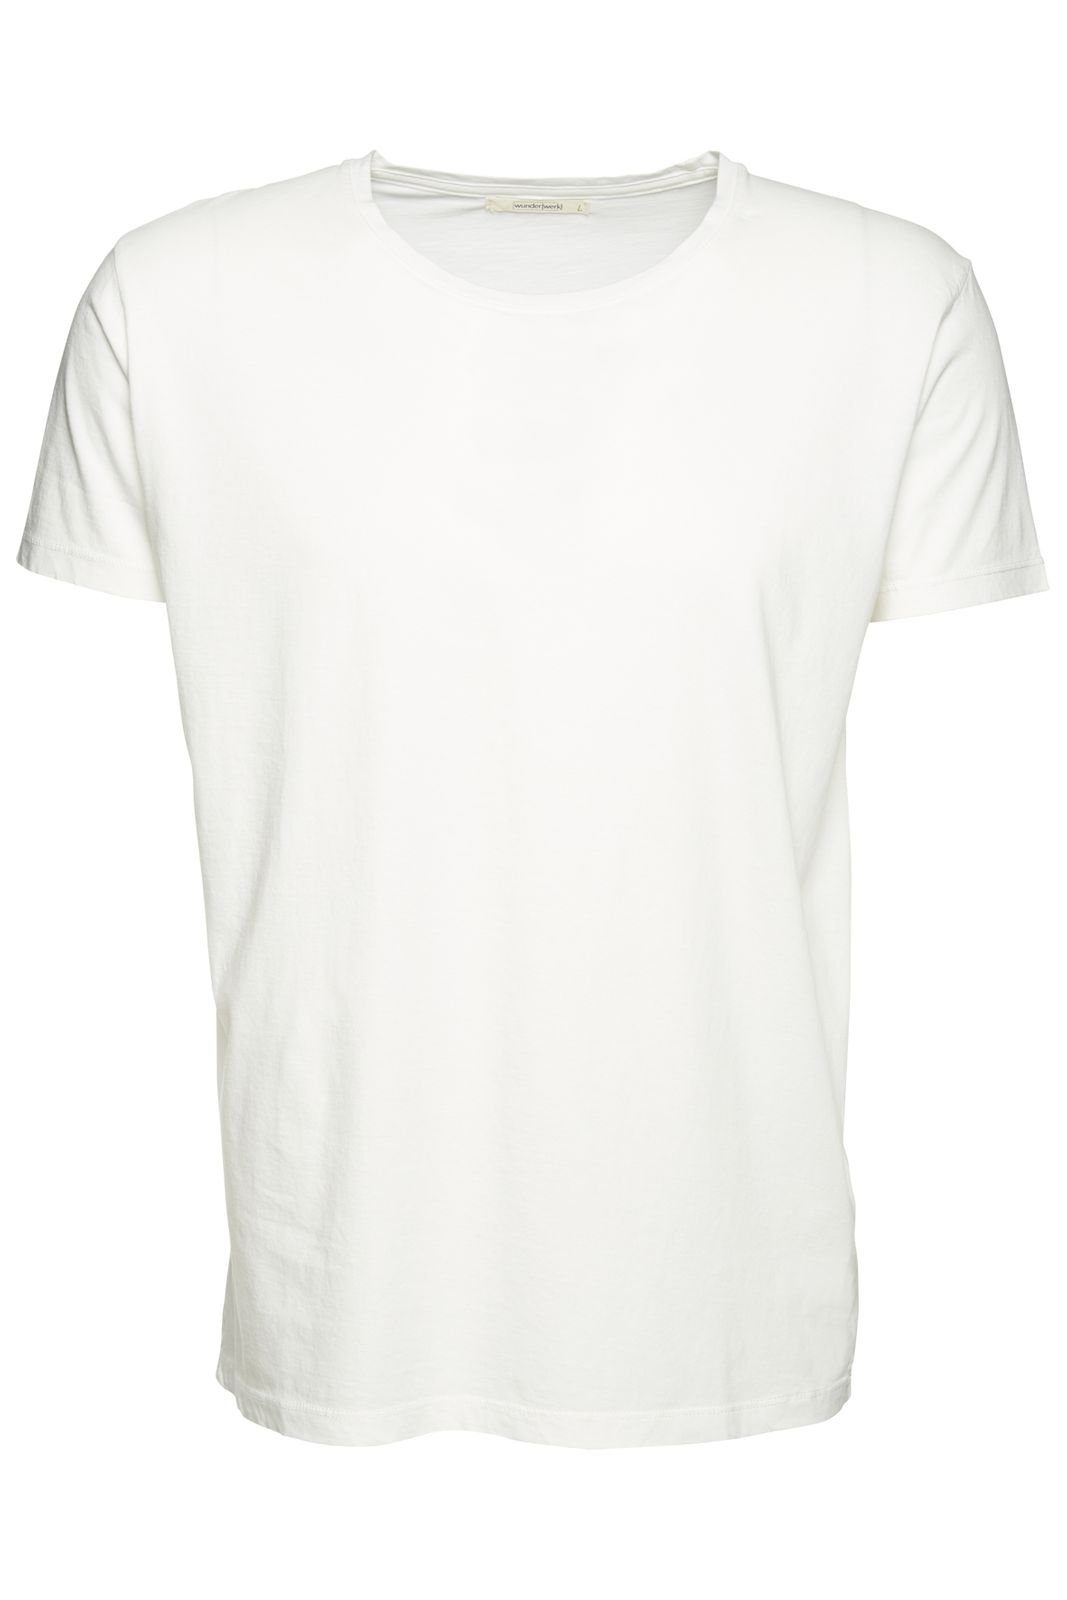 wunderwerk T-Shirt Core Tee male 100 - tinto mal white